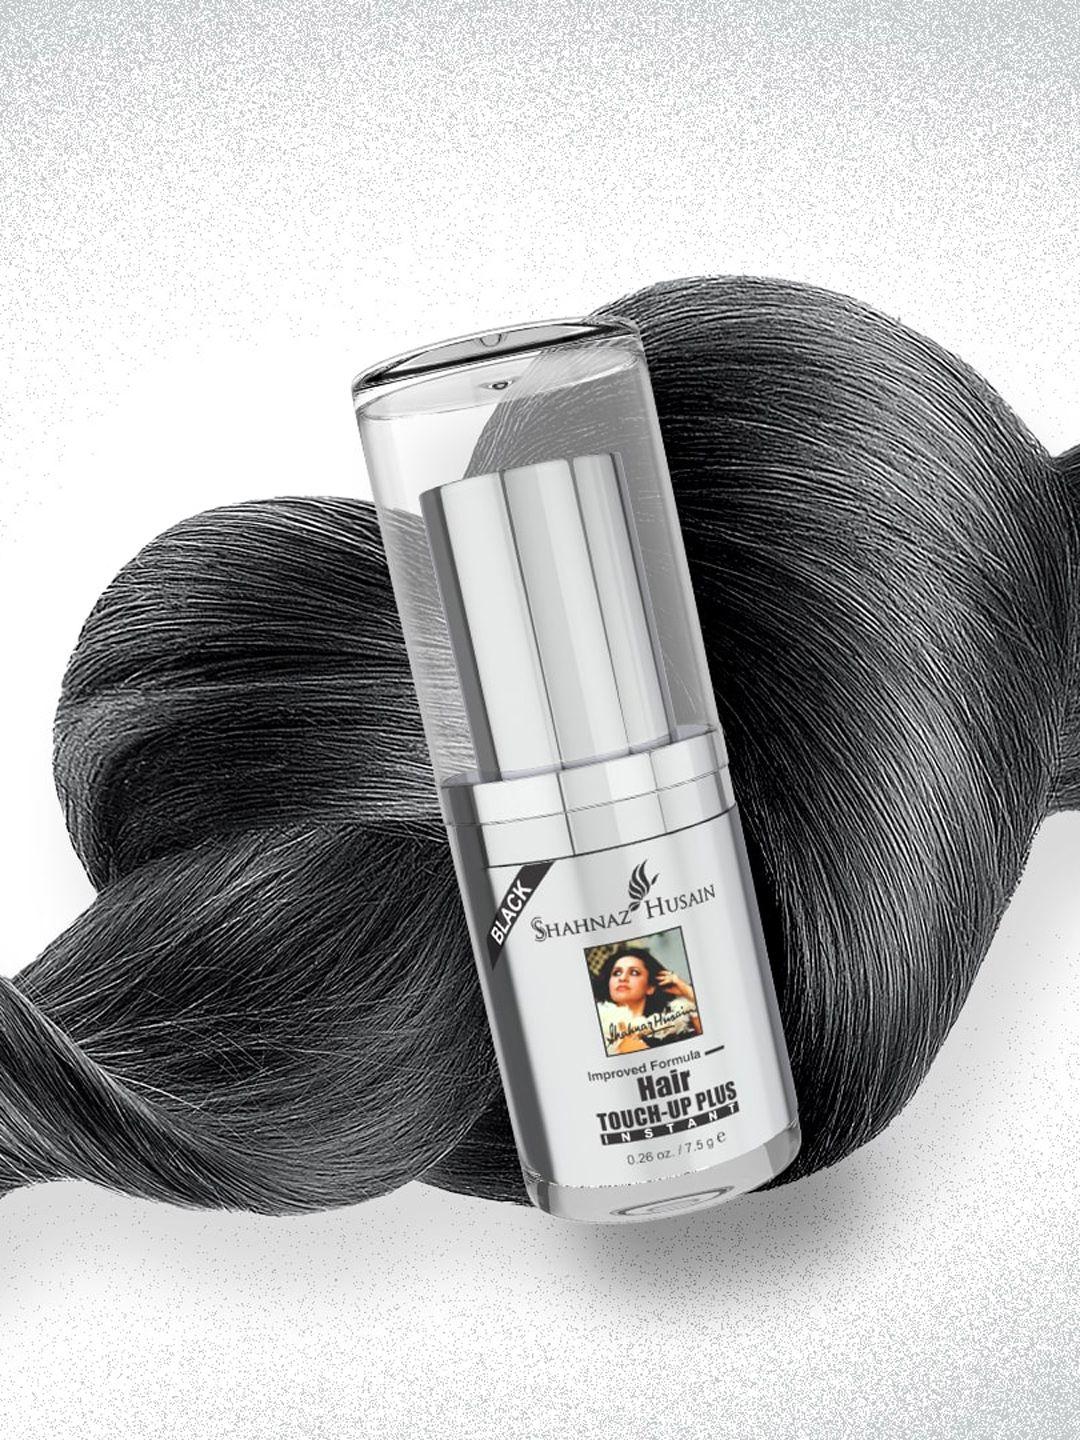 shahnaz husain improved formula hair touch-up plus - black 7.50 gm